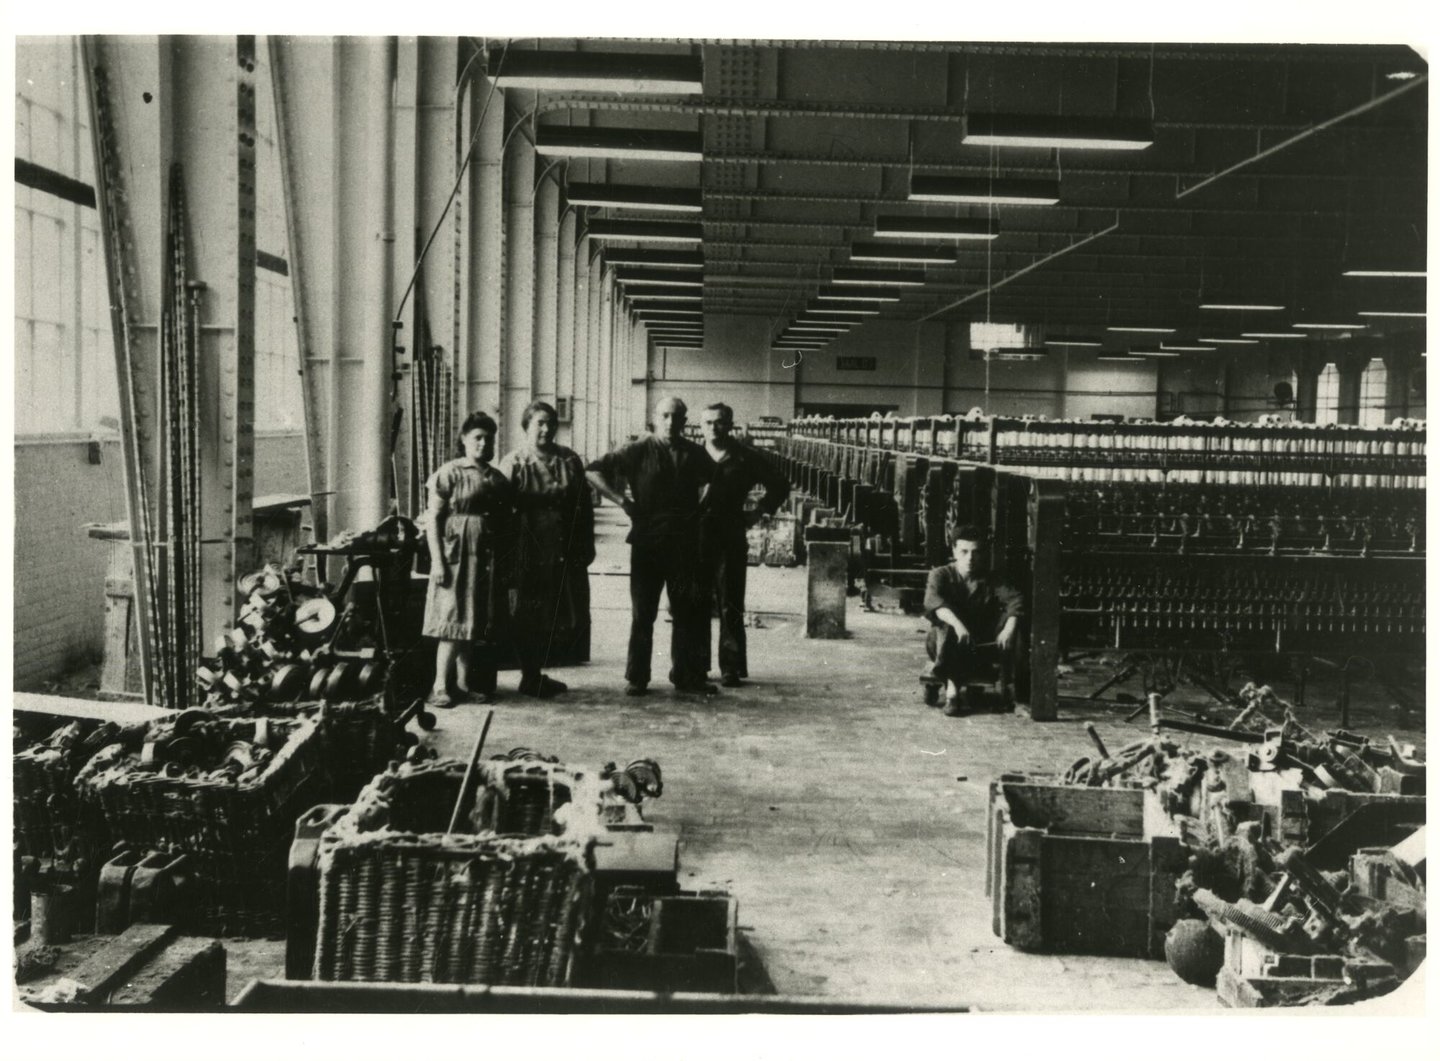 Binnenzicht van spinnerij textielfabriek La Louisiana in Gent